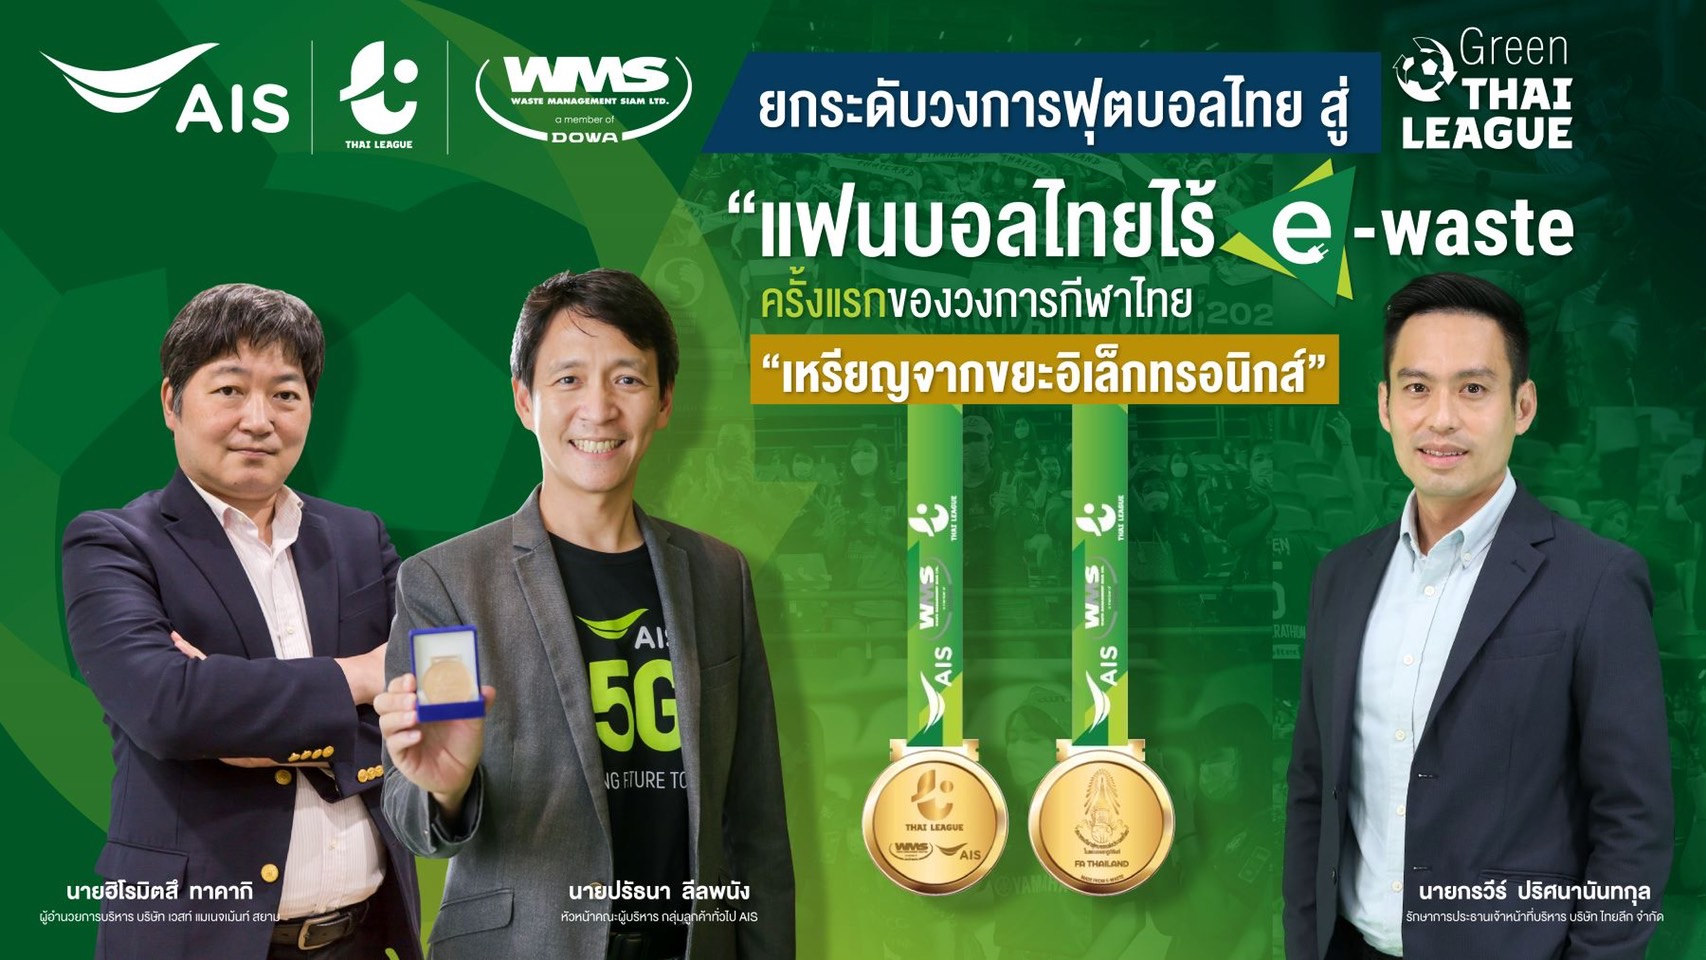 AIS - WMS ผนึกกำลัง ไทยลีก ยกระดับวงการฟุตบอลไทย สู่ Green ไทยลีก เพื่อสิ่งแวดล้อม ร่วมสร้างการมีส่วนร่วม สานต่อภารกิจ “แฟนบอลไทยไร้ E-Waste” ประเดิมมอบรางวัลเกียรติยศศึกไทยลีก “เหรียญจากขยะอิเล็กทรอนิกส์” ครั้งแรกของวงการกีฬาไทย